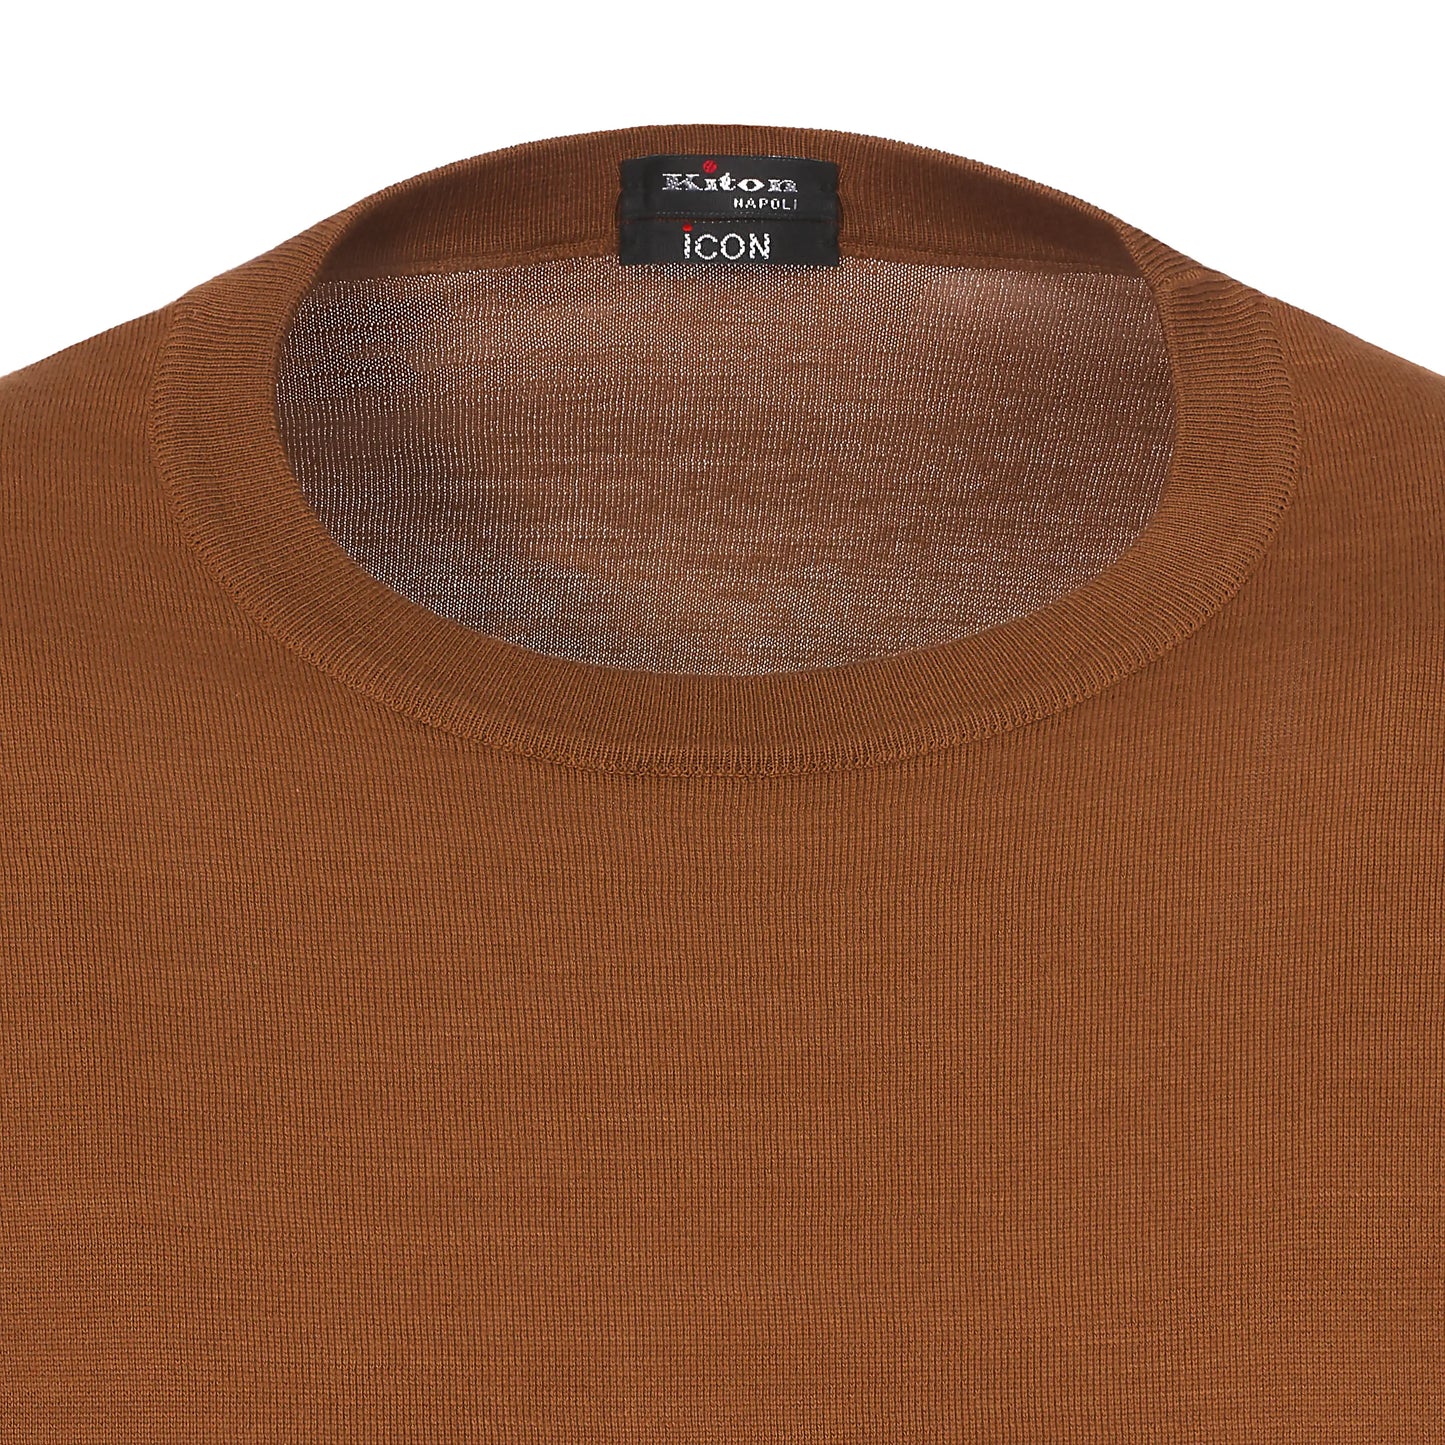 Cotton T-Shirt Sweater in Desert Brown